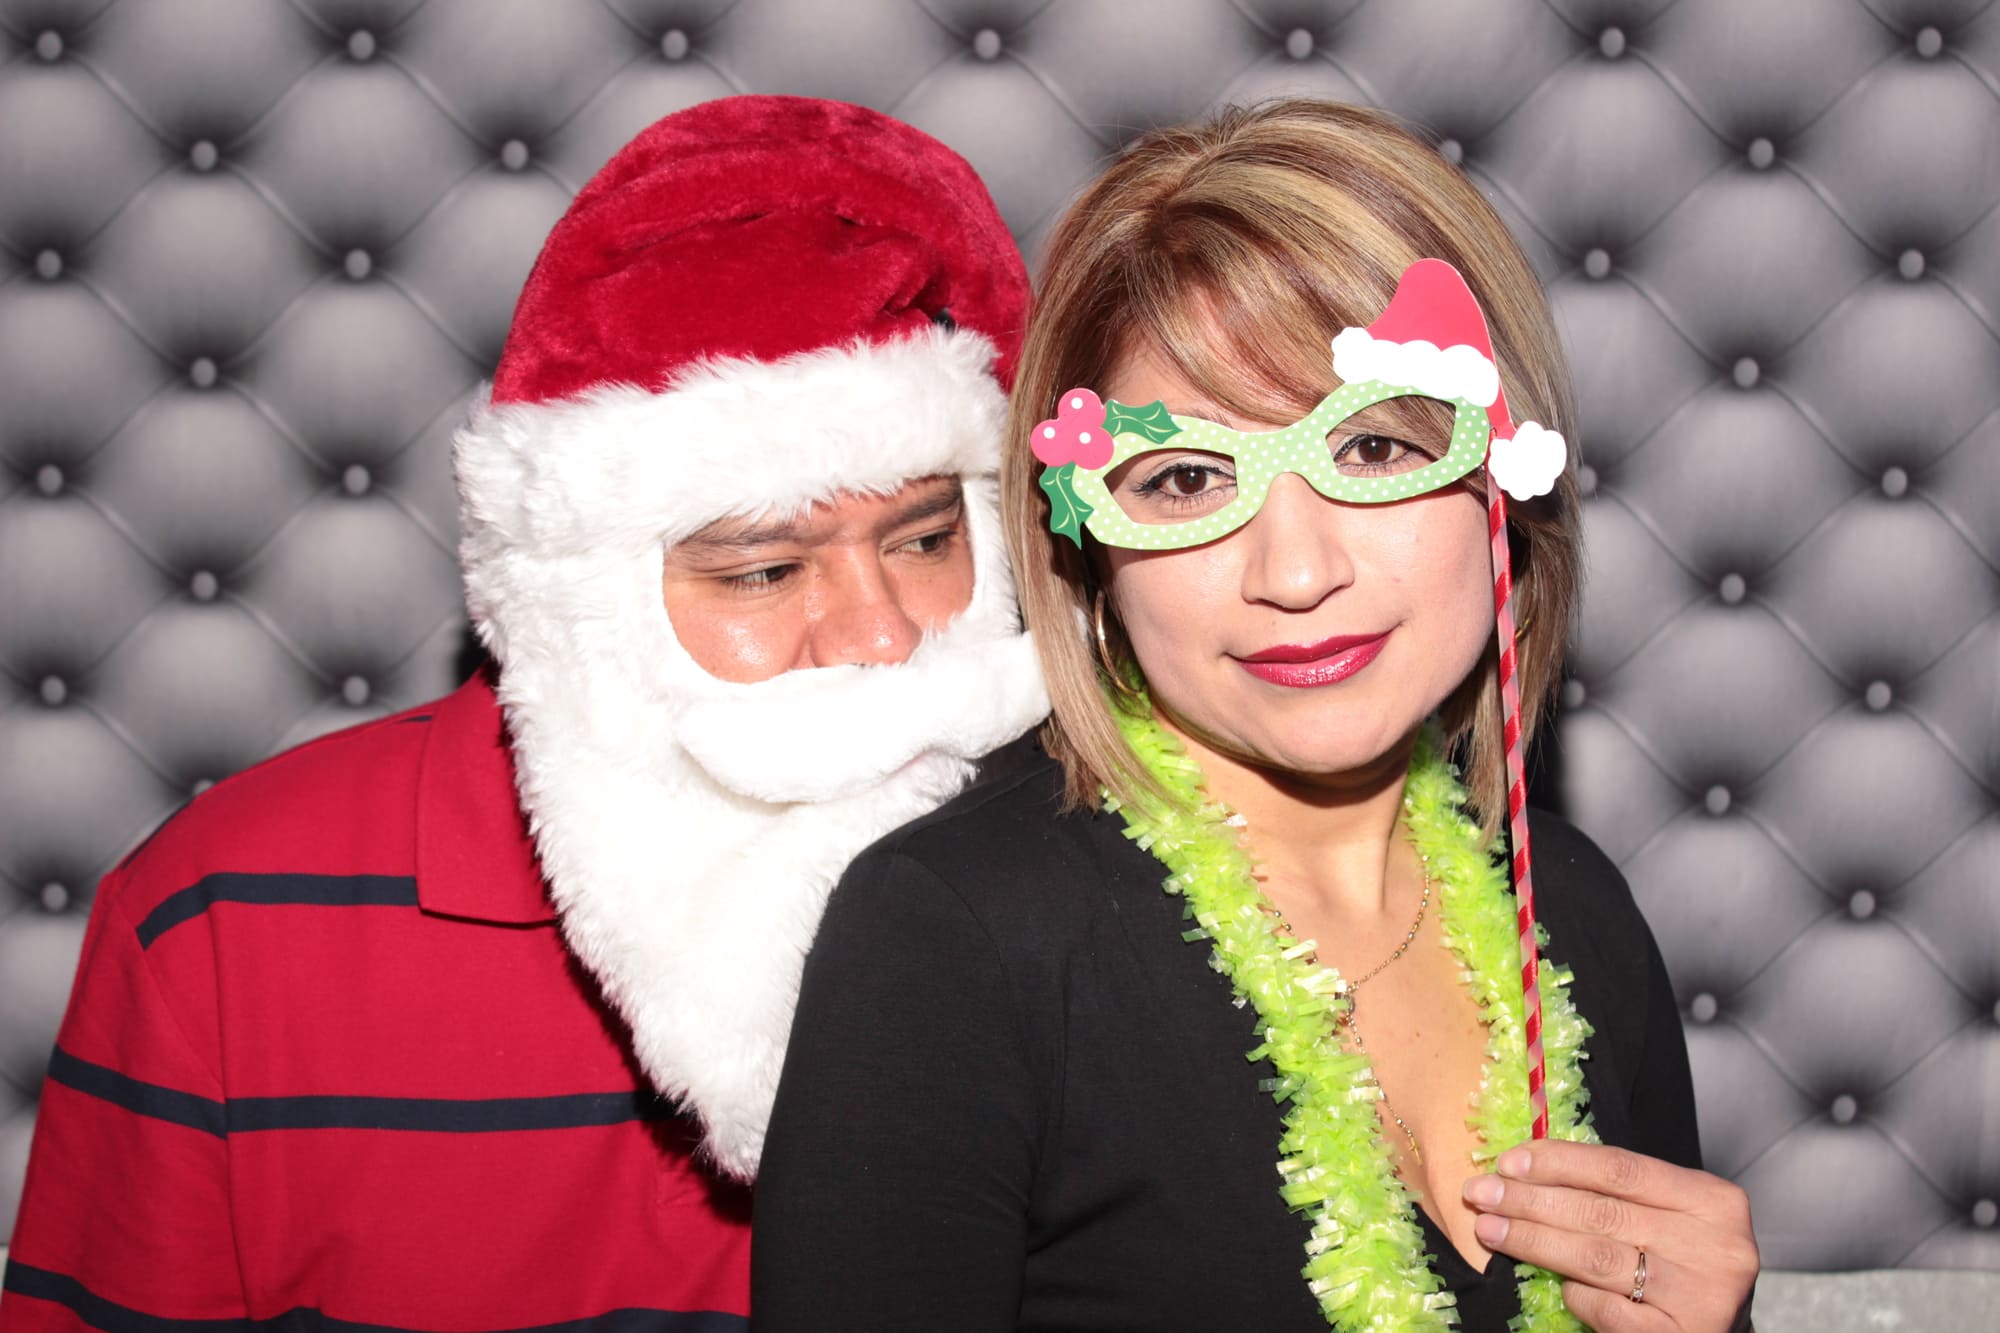 Photobooth-Austin-Rental-Party-Company-Holiday-No. 1-Memories-Fun-Props